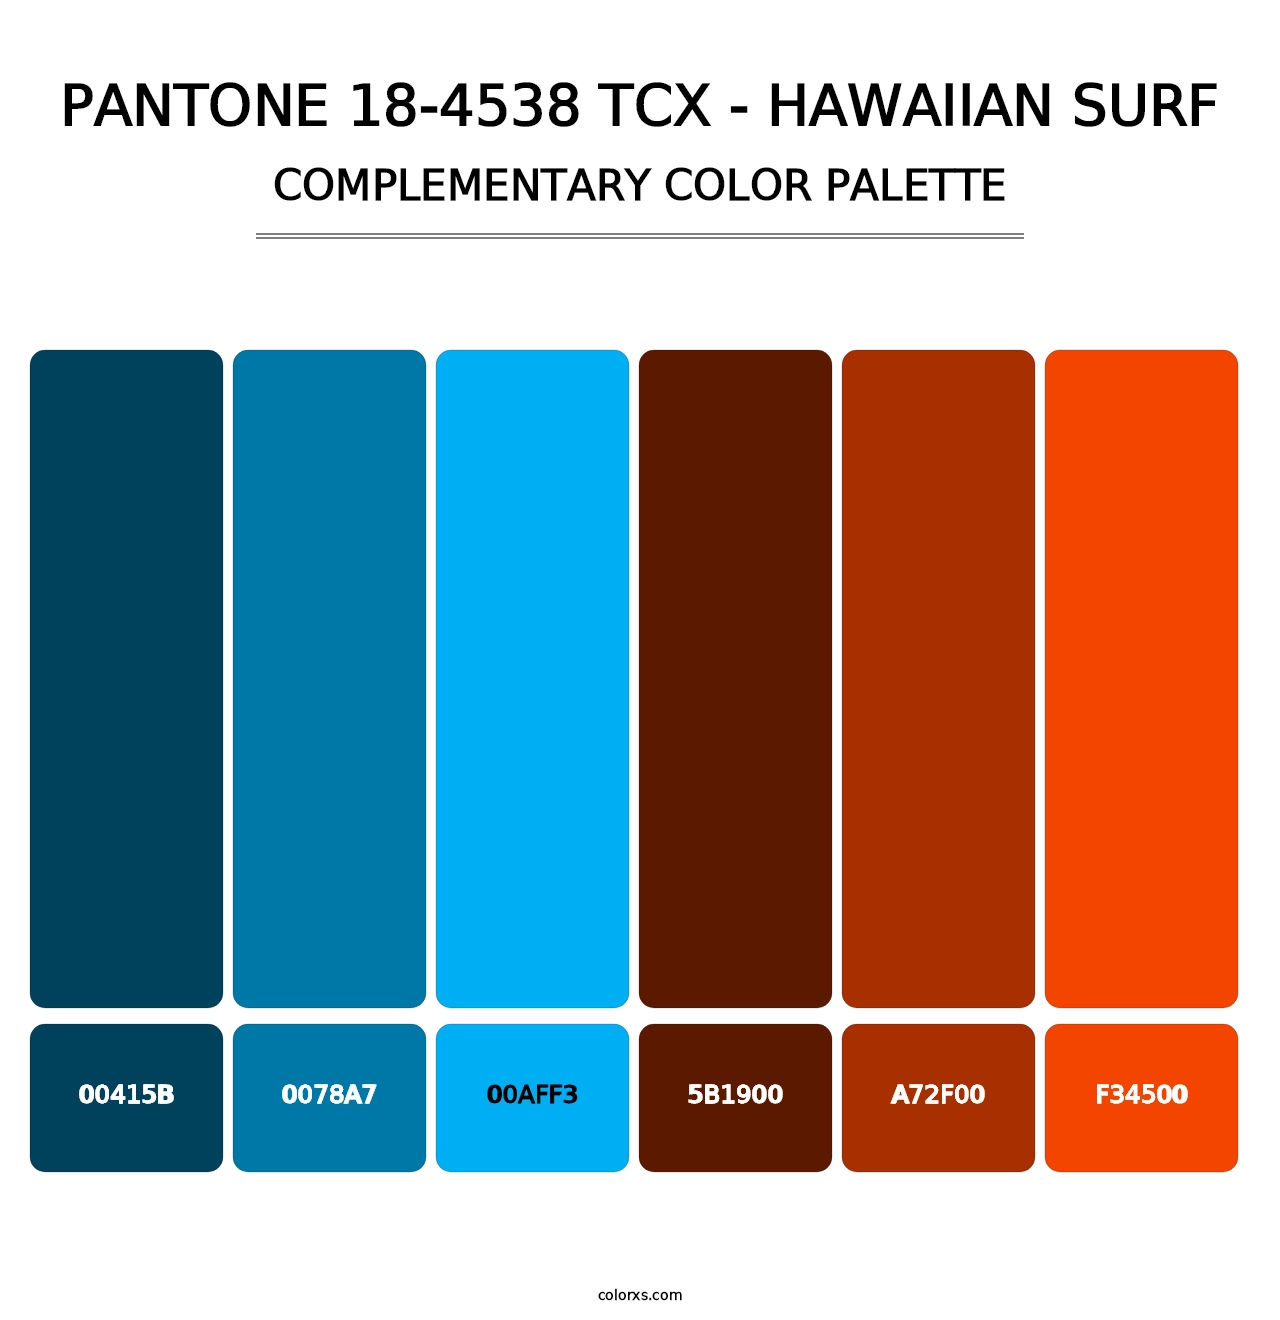 PANTONE 18-4538 TCX - Hawaiian Surf - Complementary Color Palette